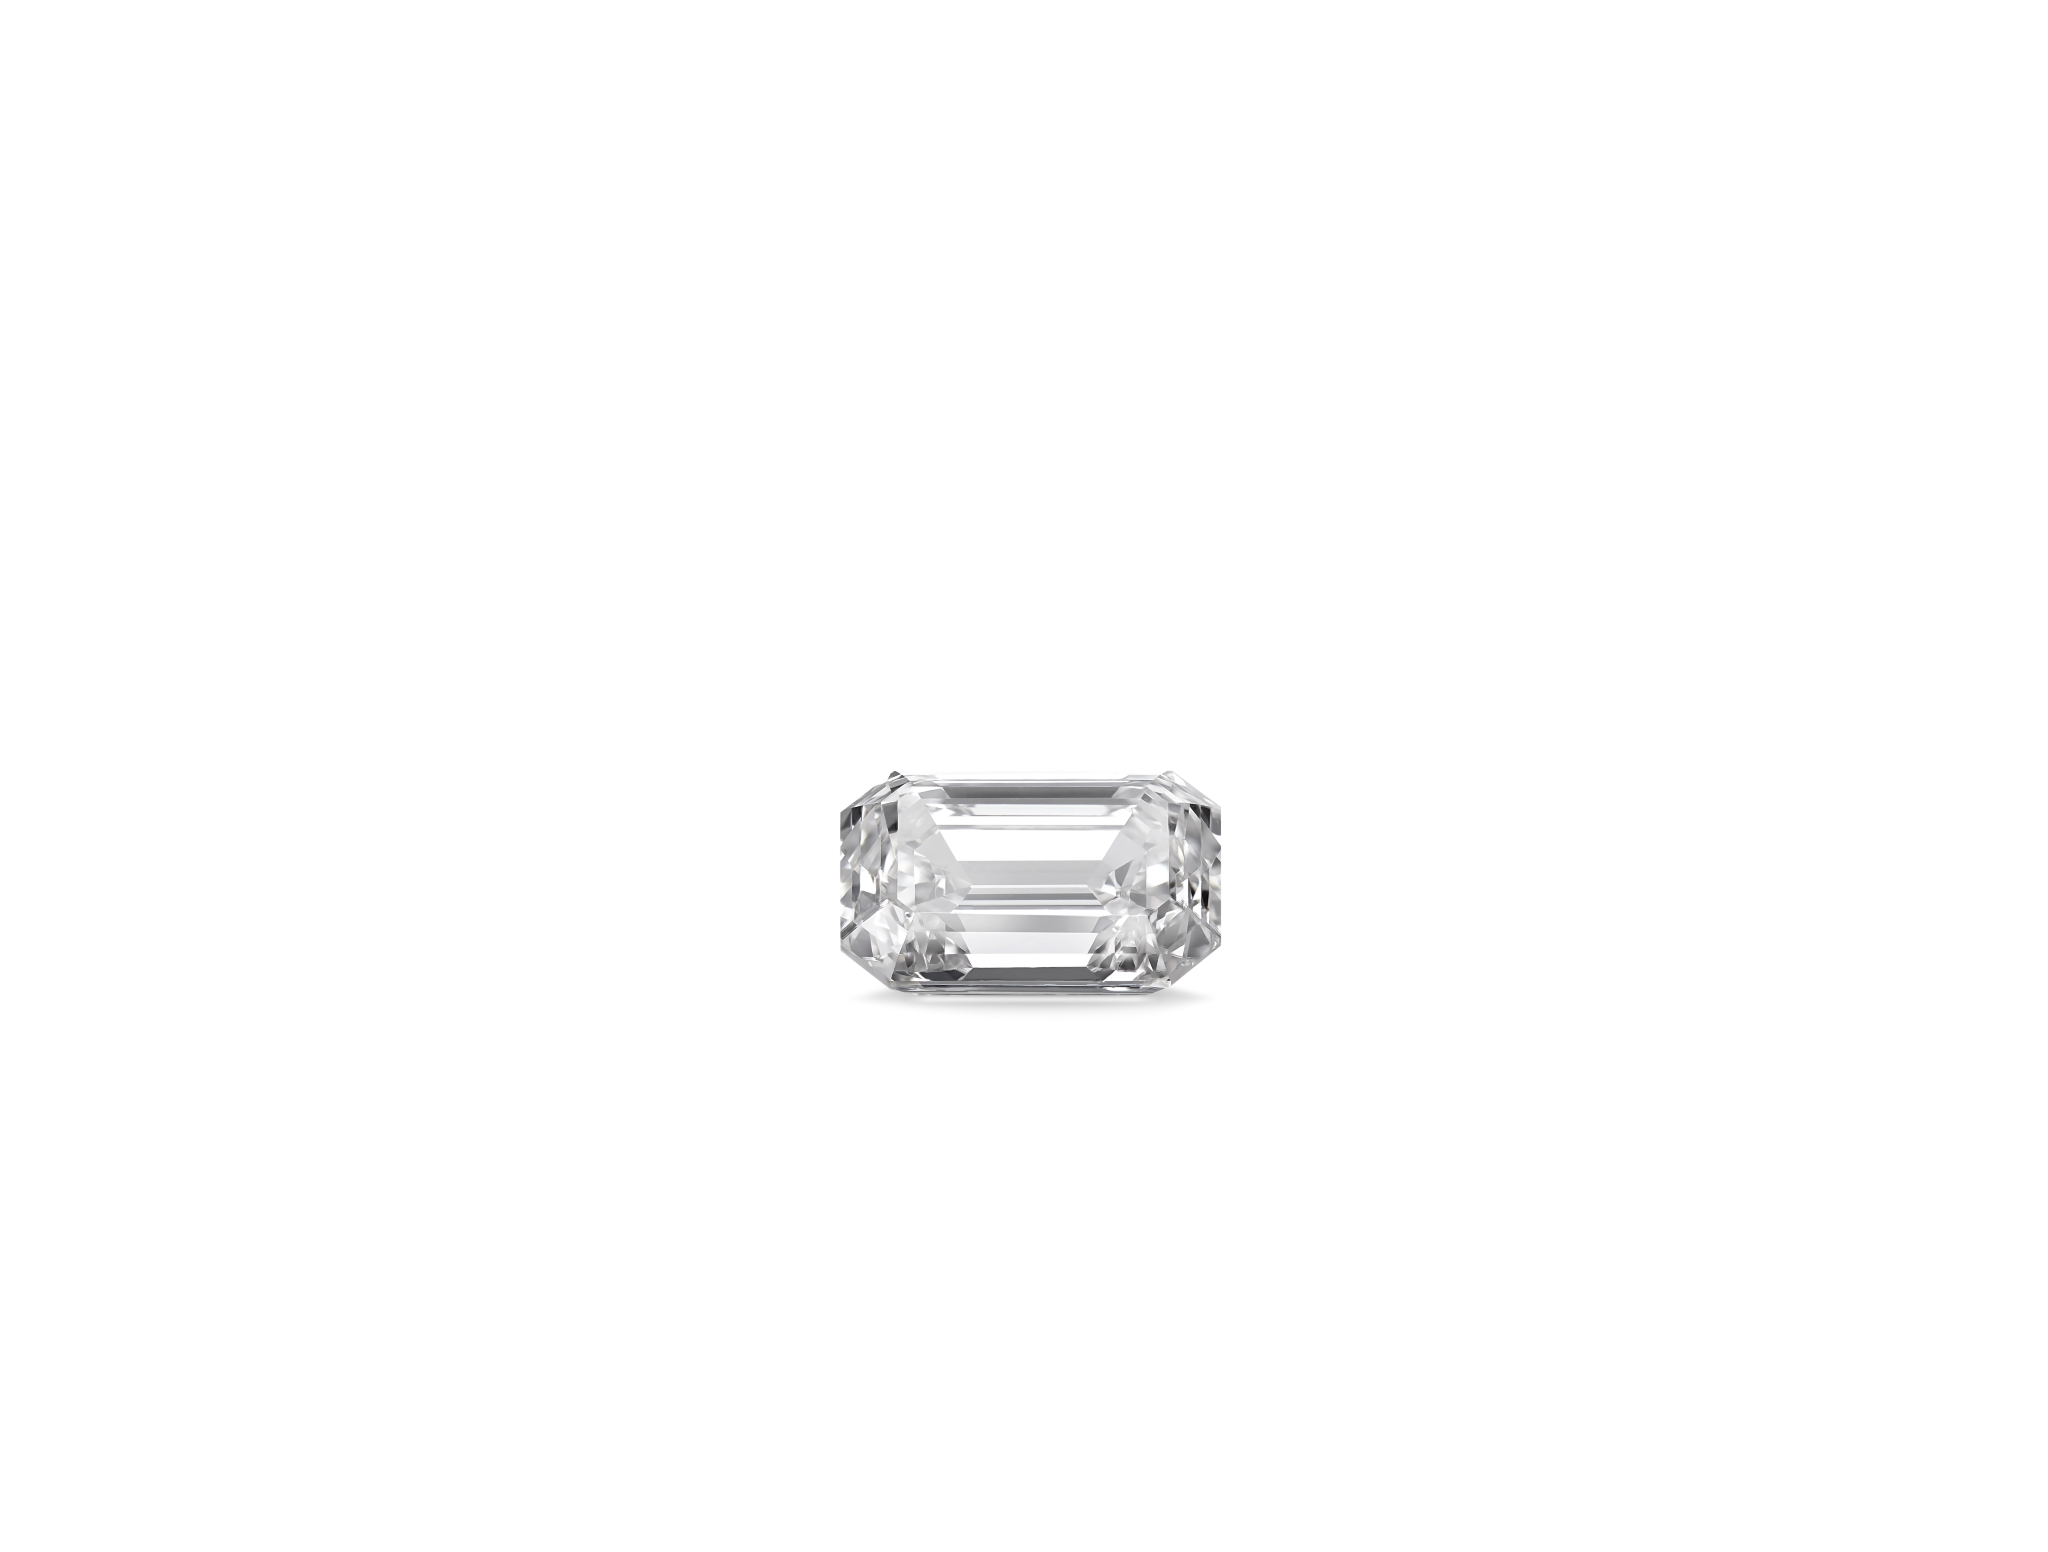 Side view of 1 carat white emerald cut diamond